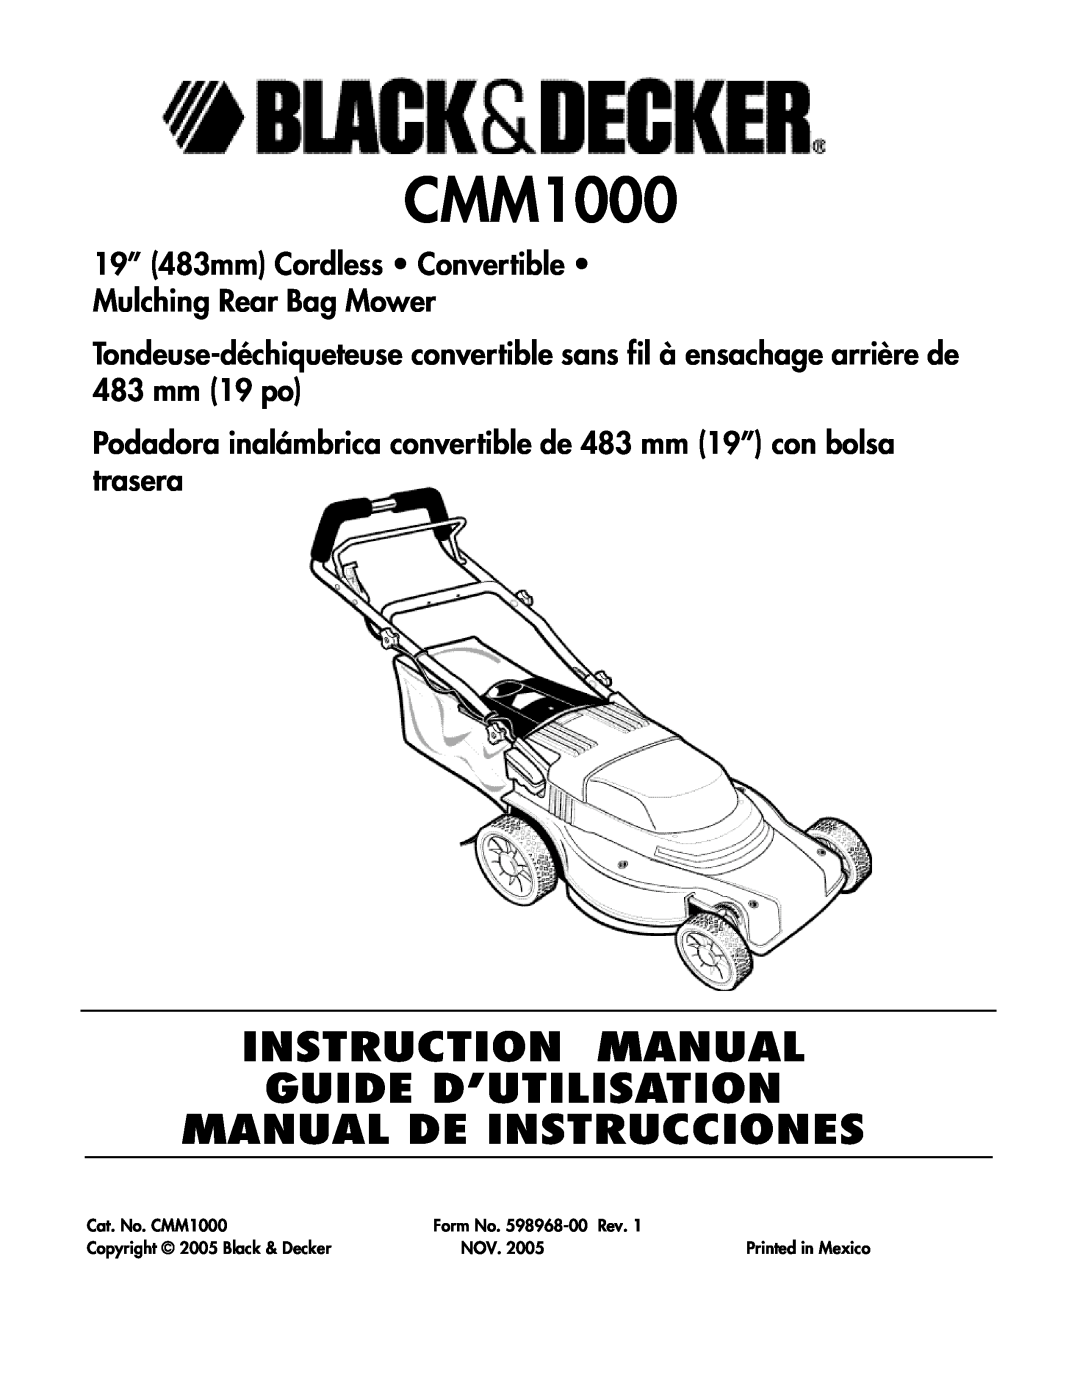 Black & Decker 598968-00 instruction manual CMM1000, 19” 483mm Cordless Convertible Mulching Rear Bag Mower 